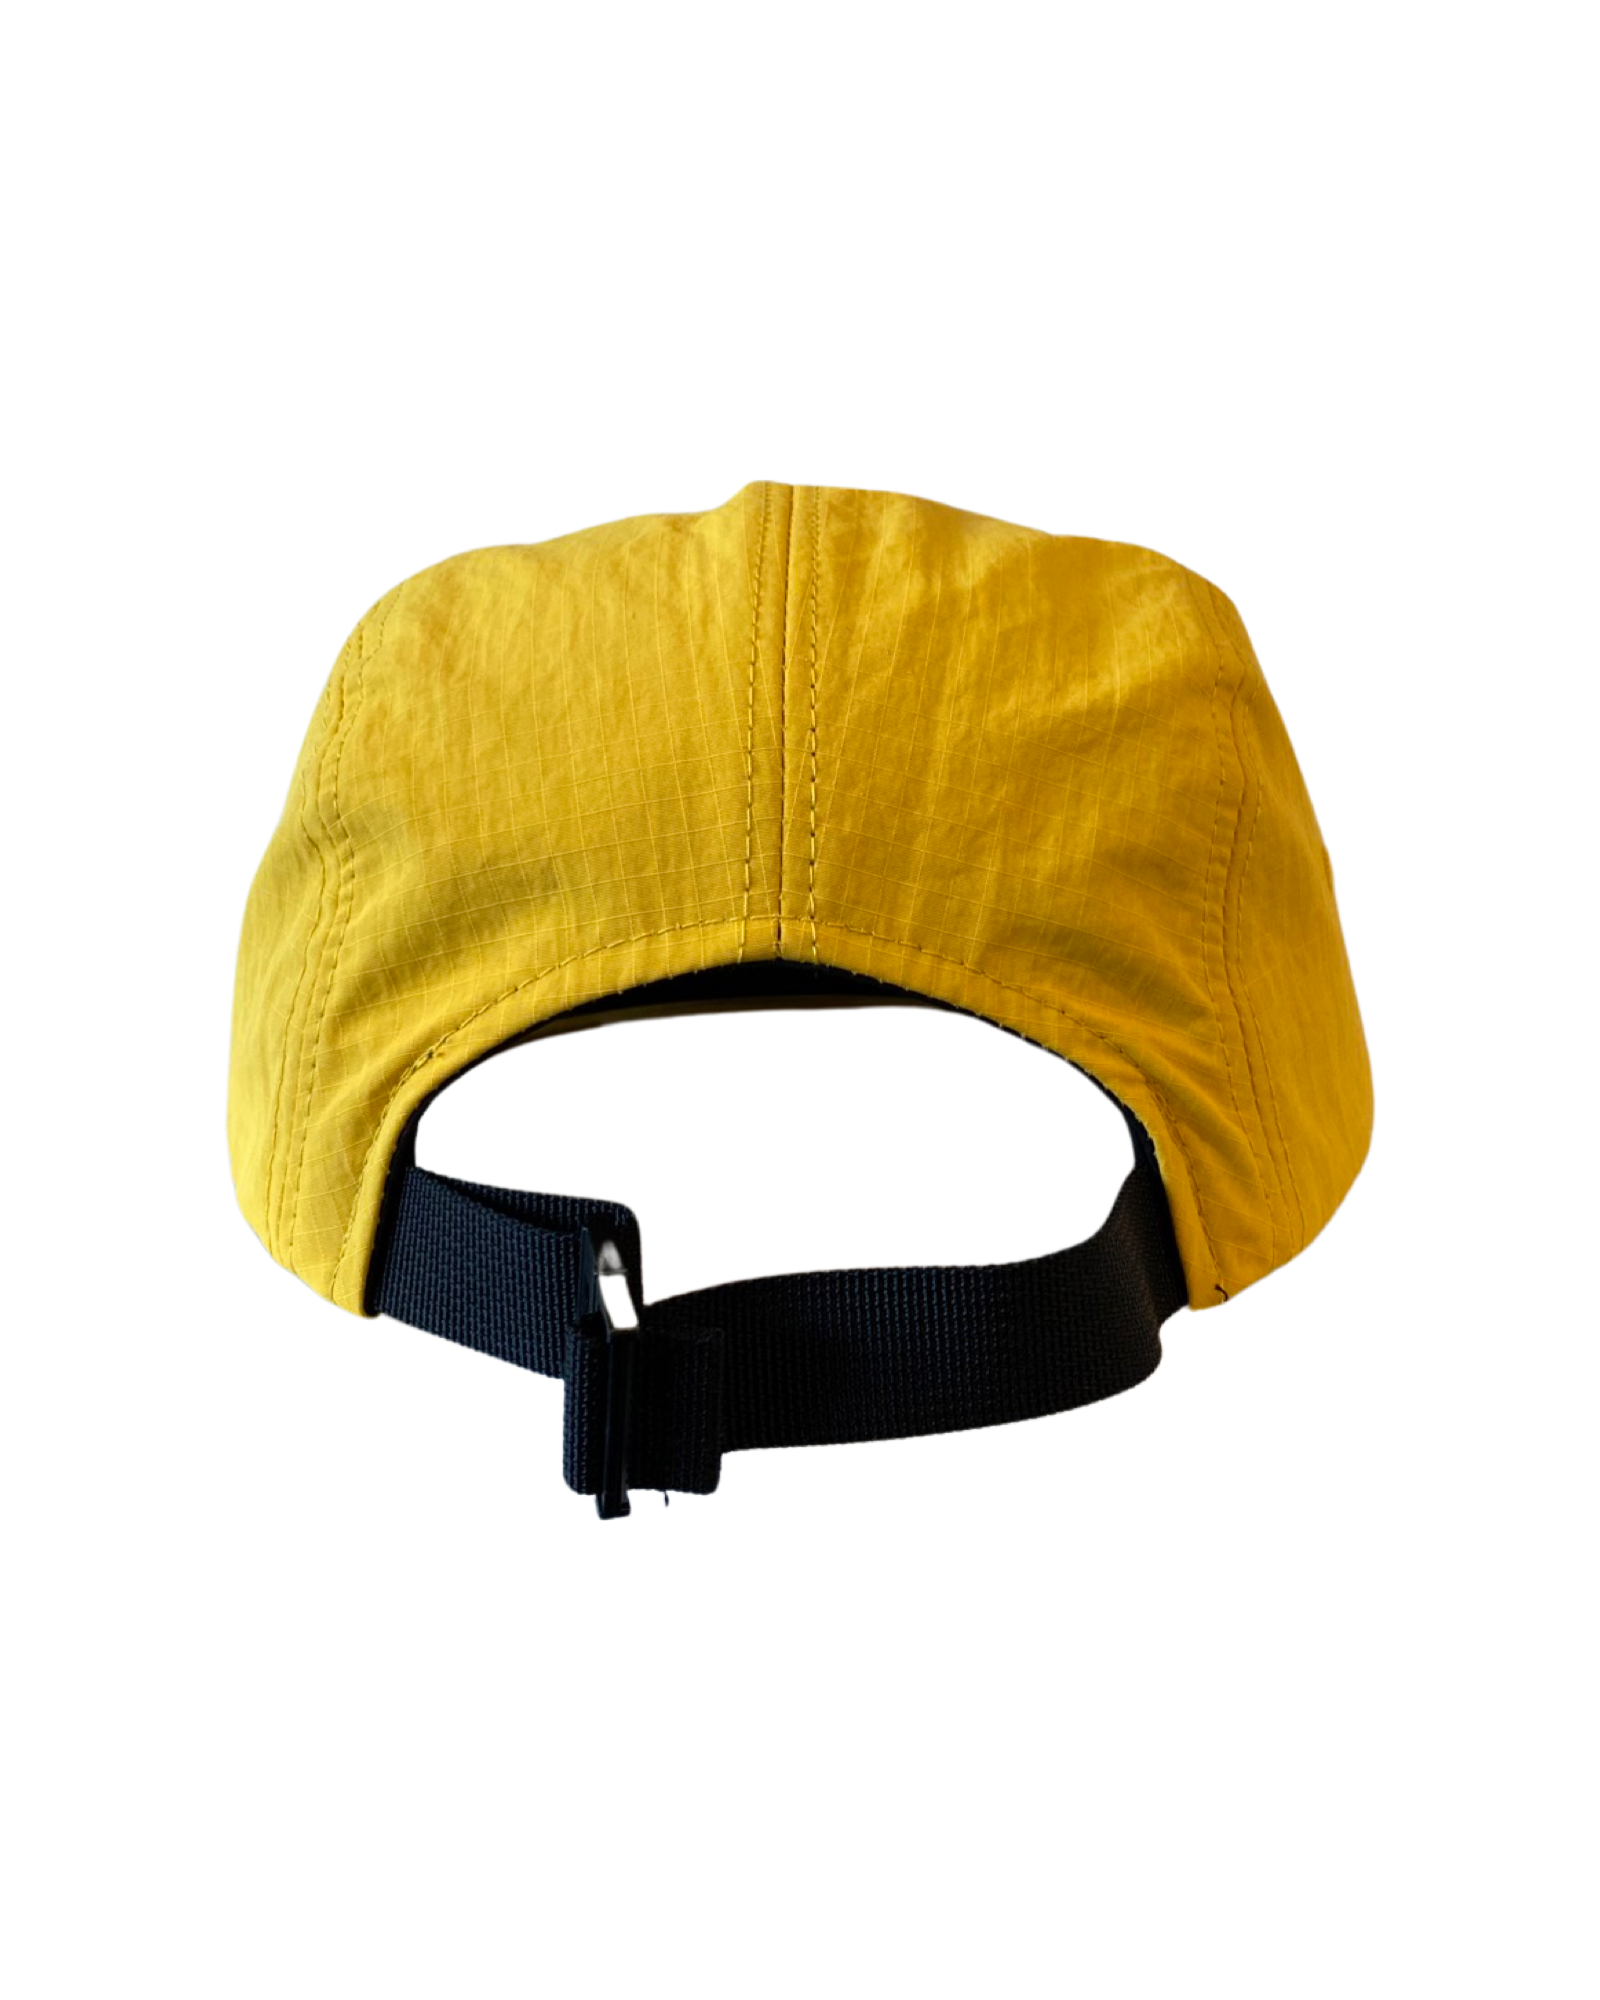 Outdoor Camp Cap - Yellow